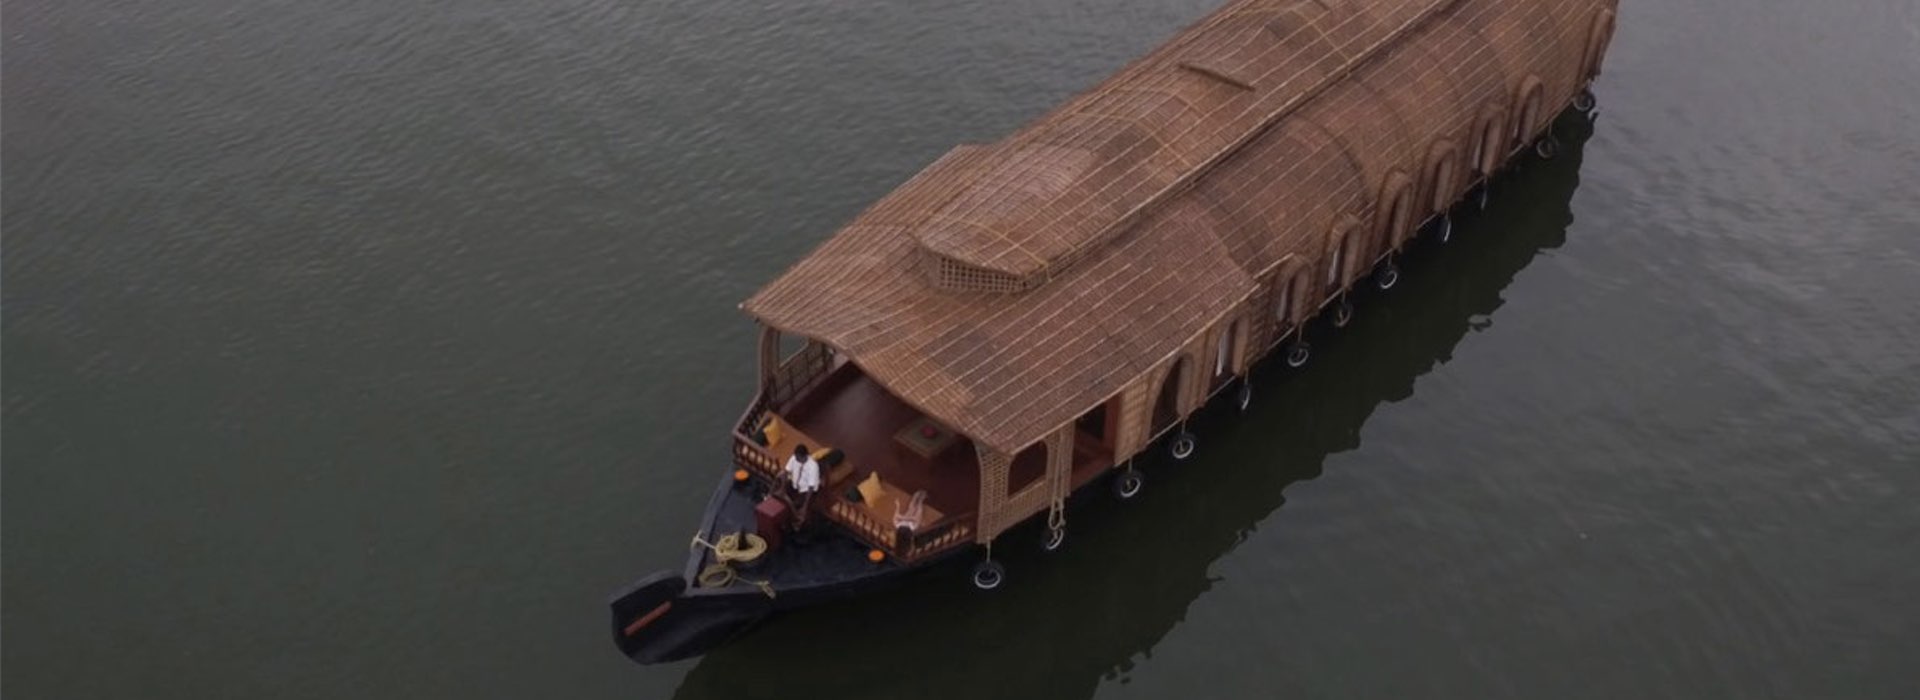 Houseboat - Kerala - India